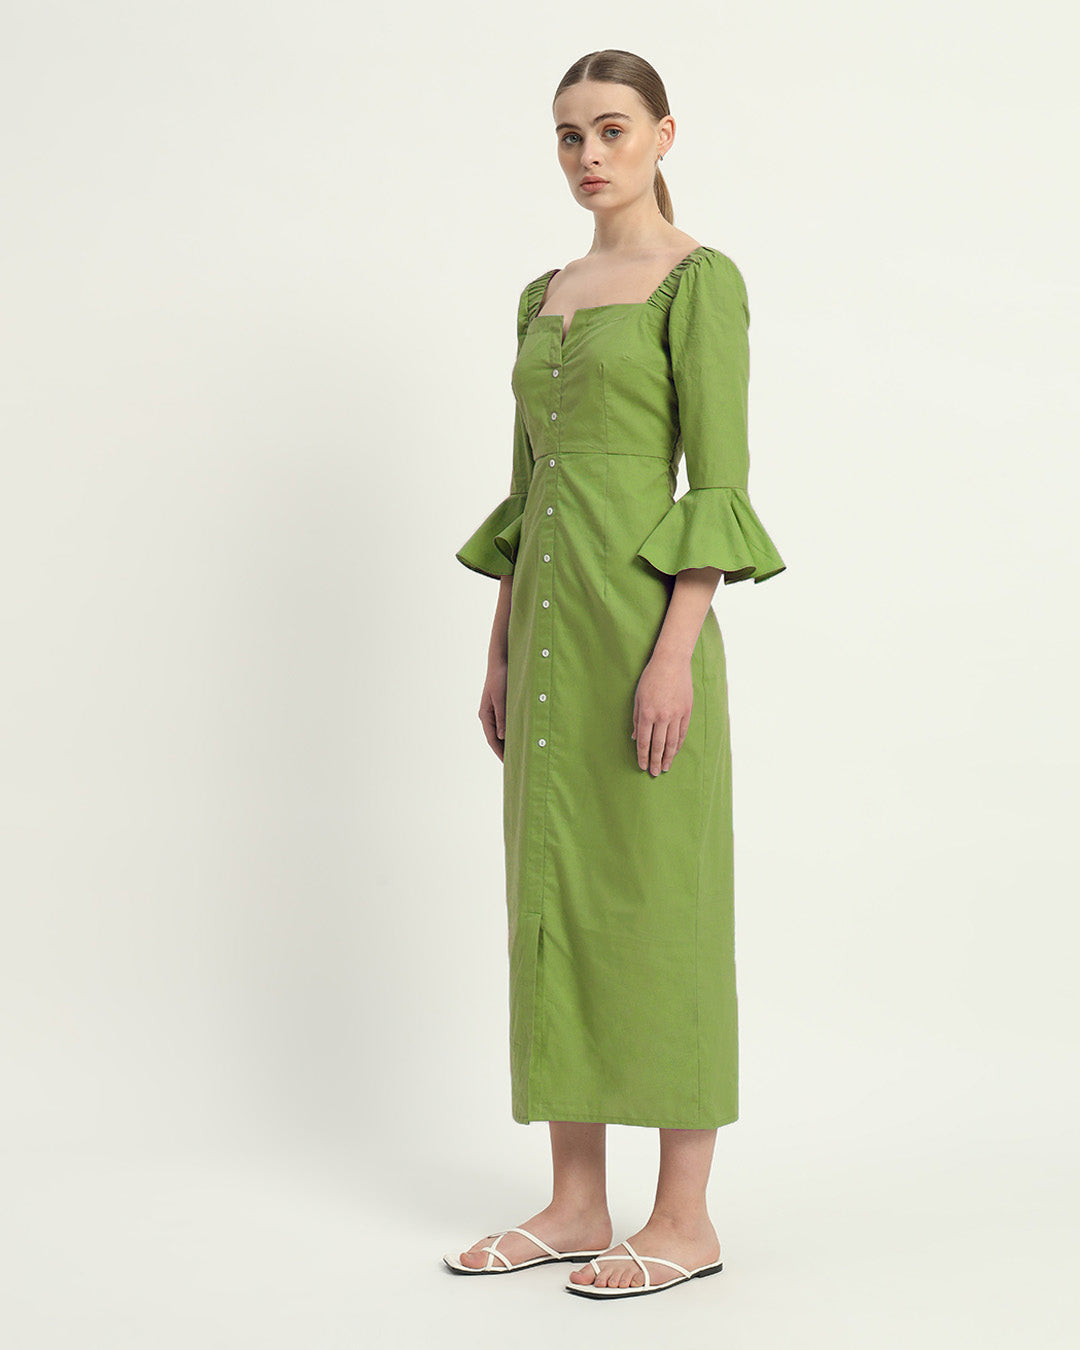 The Fern Rosendale Cotton Dress